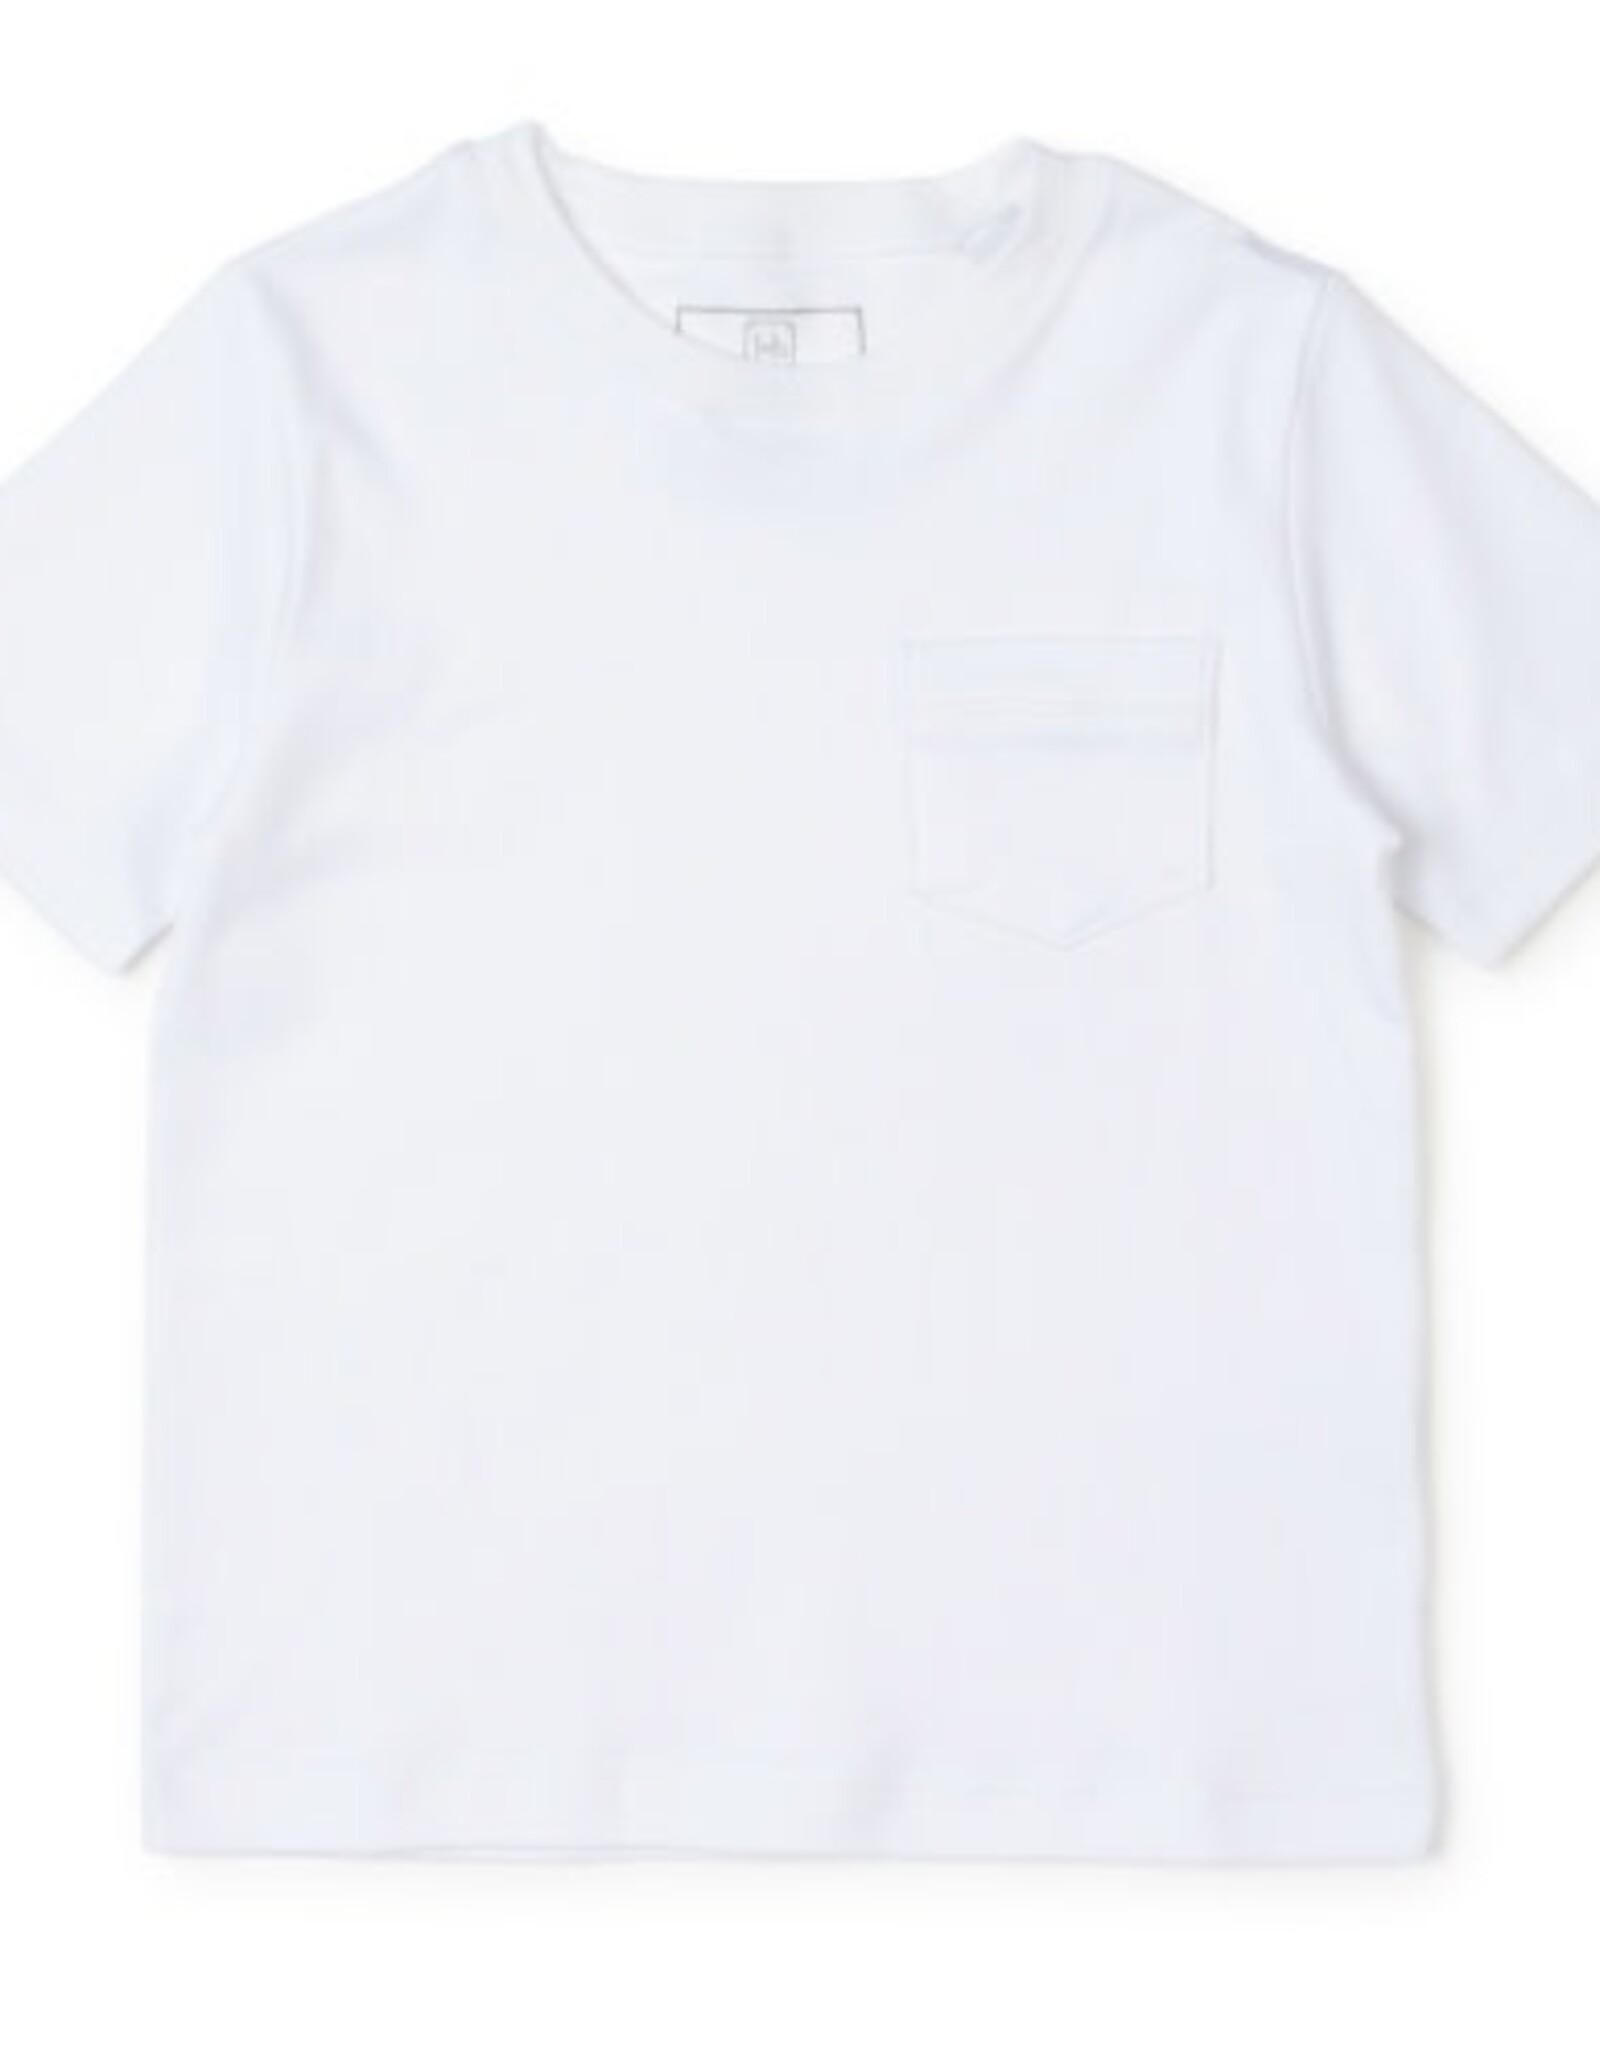 Lila + Hayes Charles Boy's T-shirt White